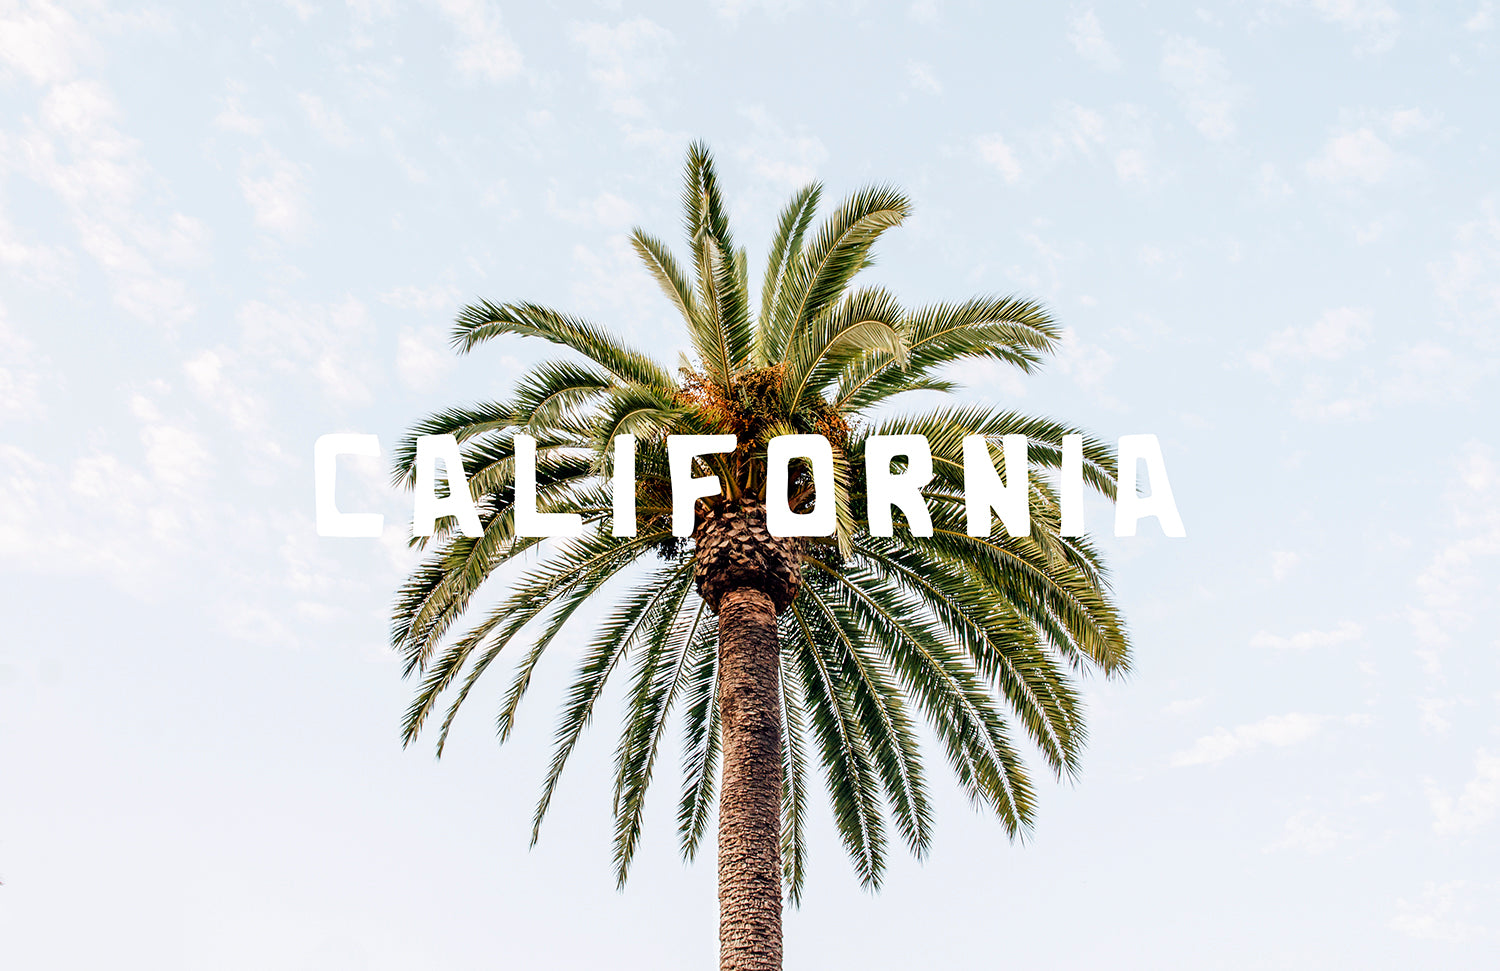 CALIFORNIA PALM TREE